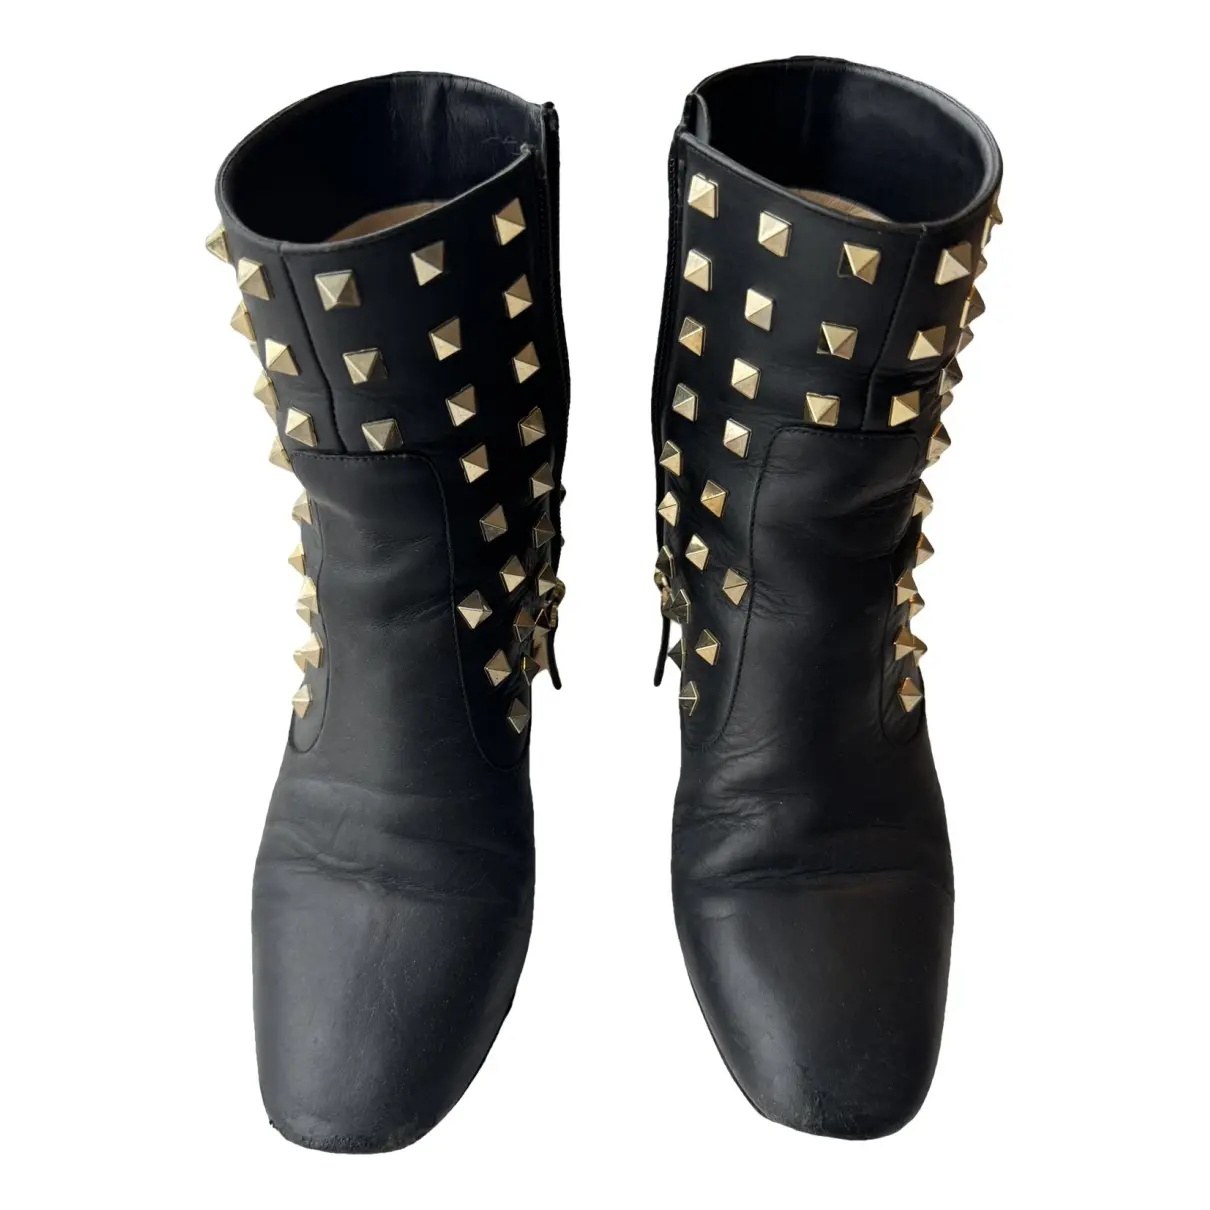 Rockstud leather boots